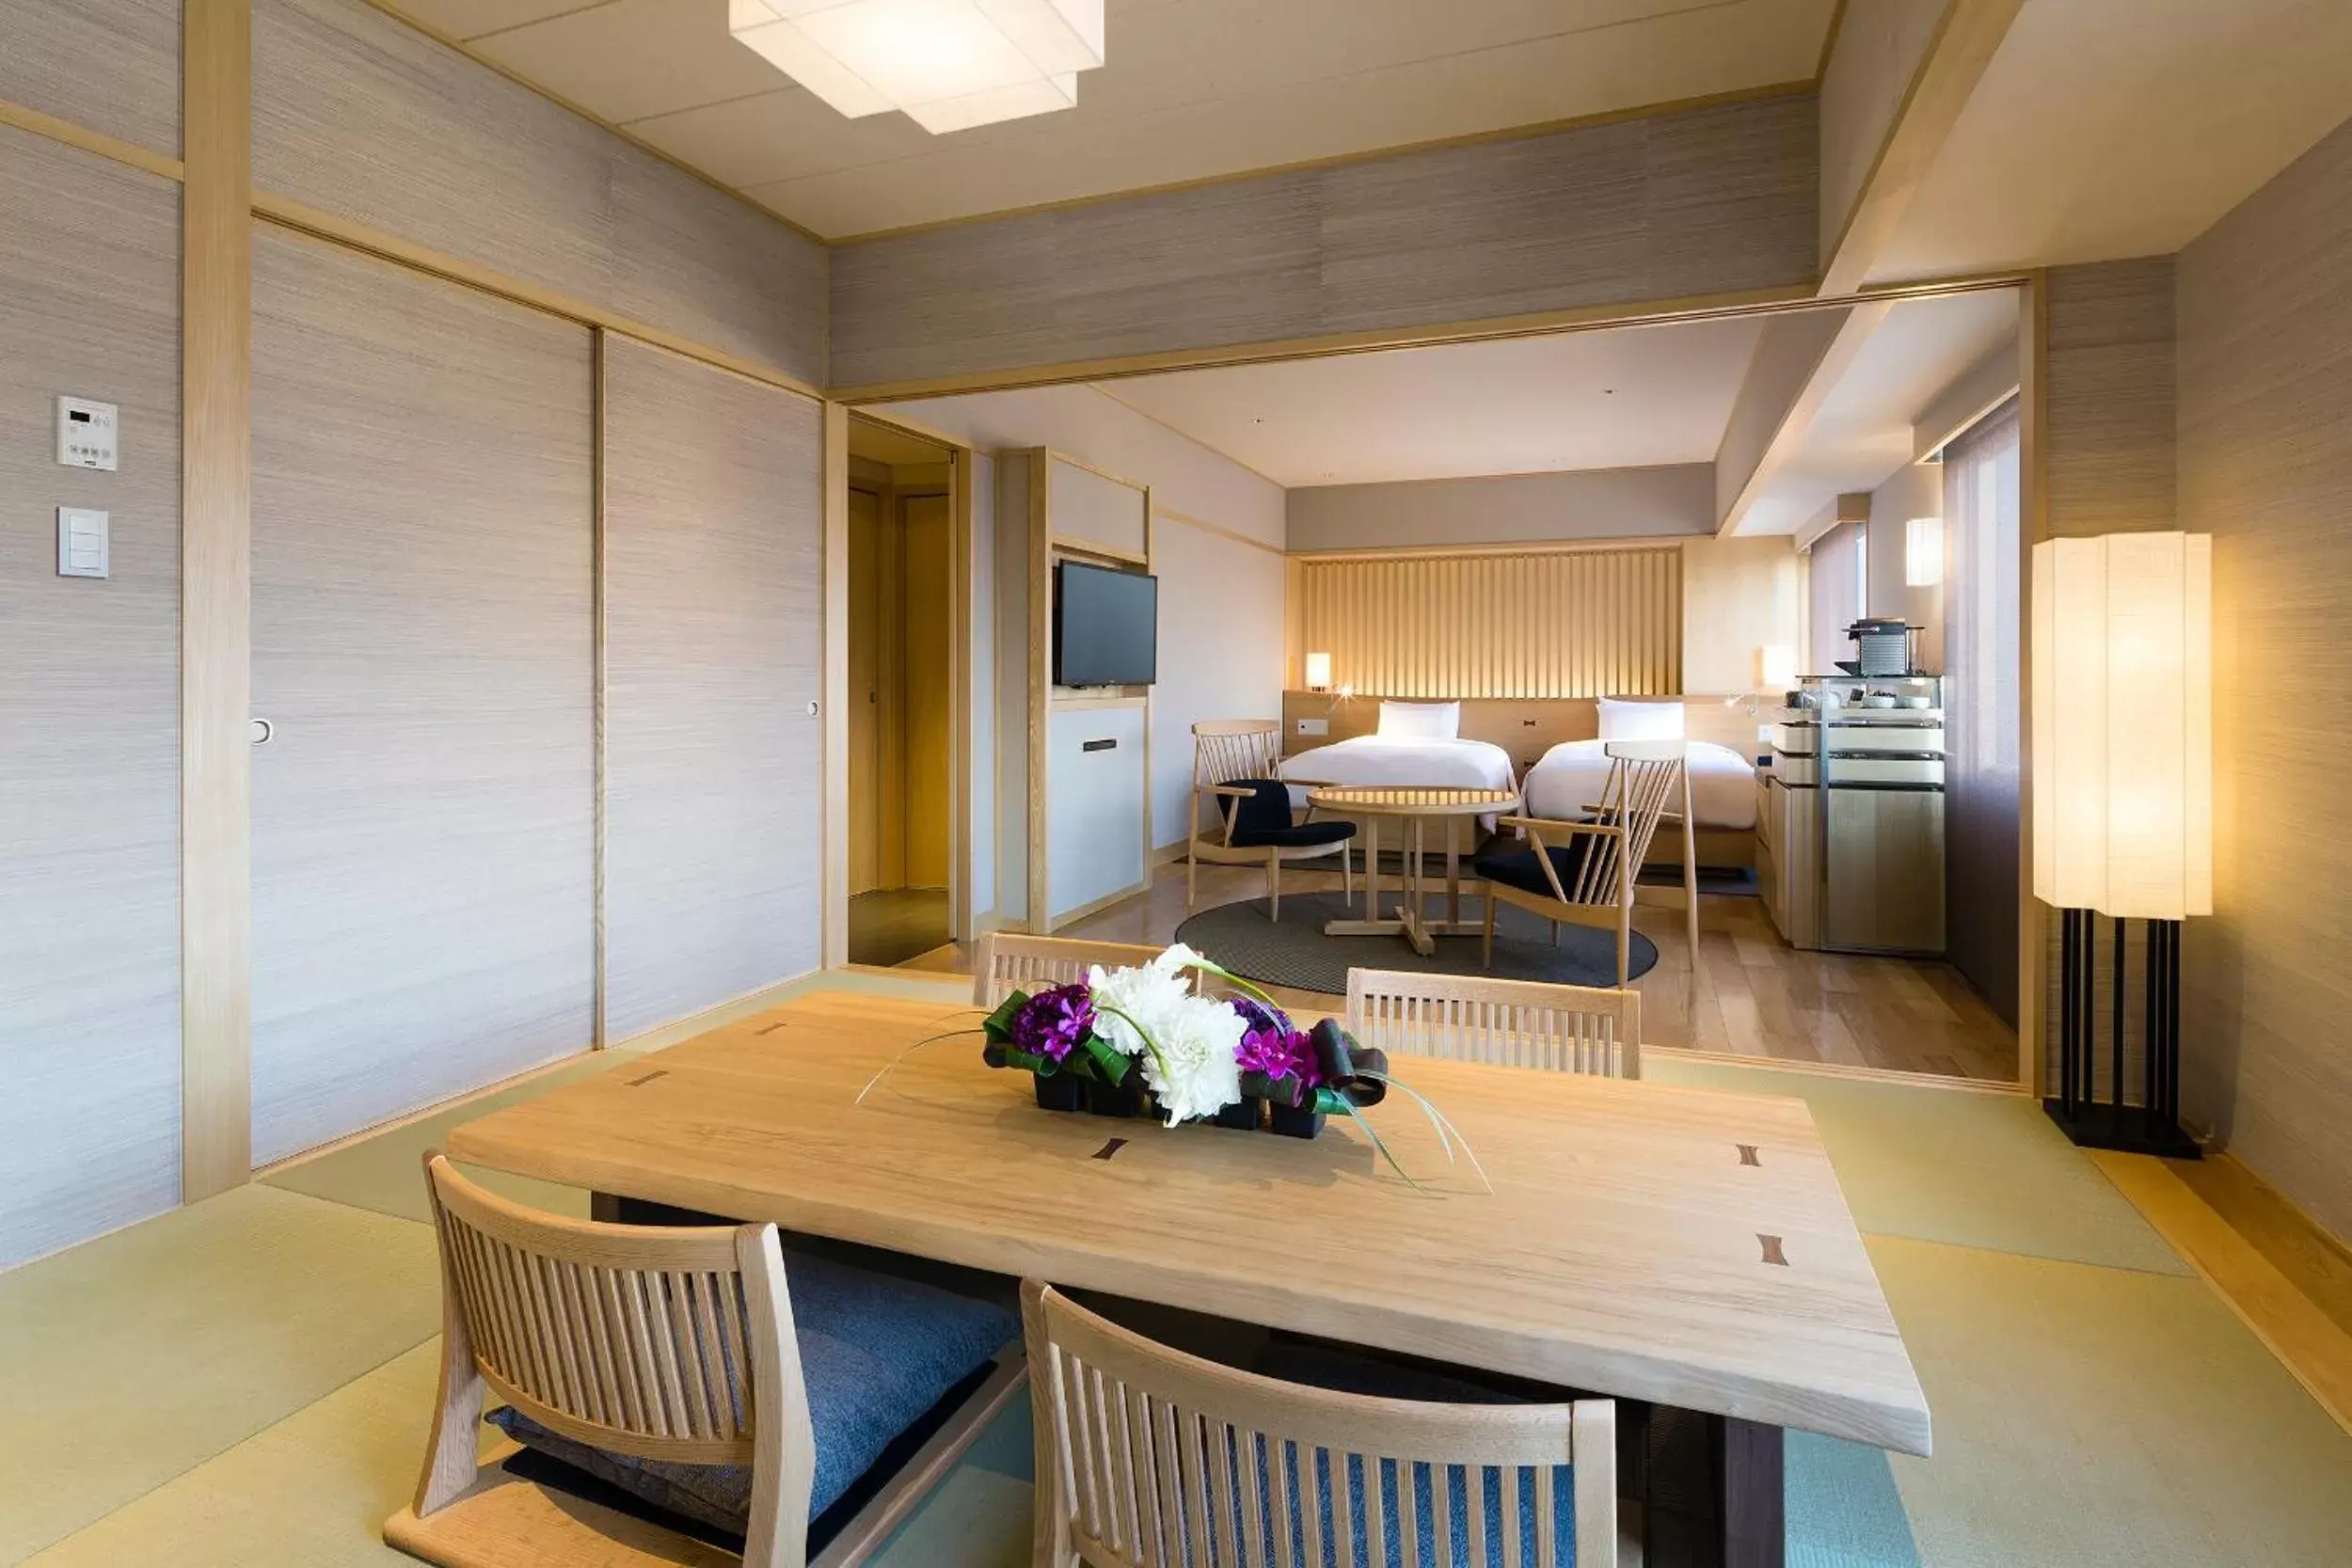 Photo of the whole room, Dining Area in Swissotel Nankai Osaka